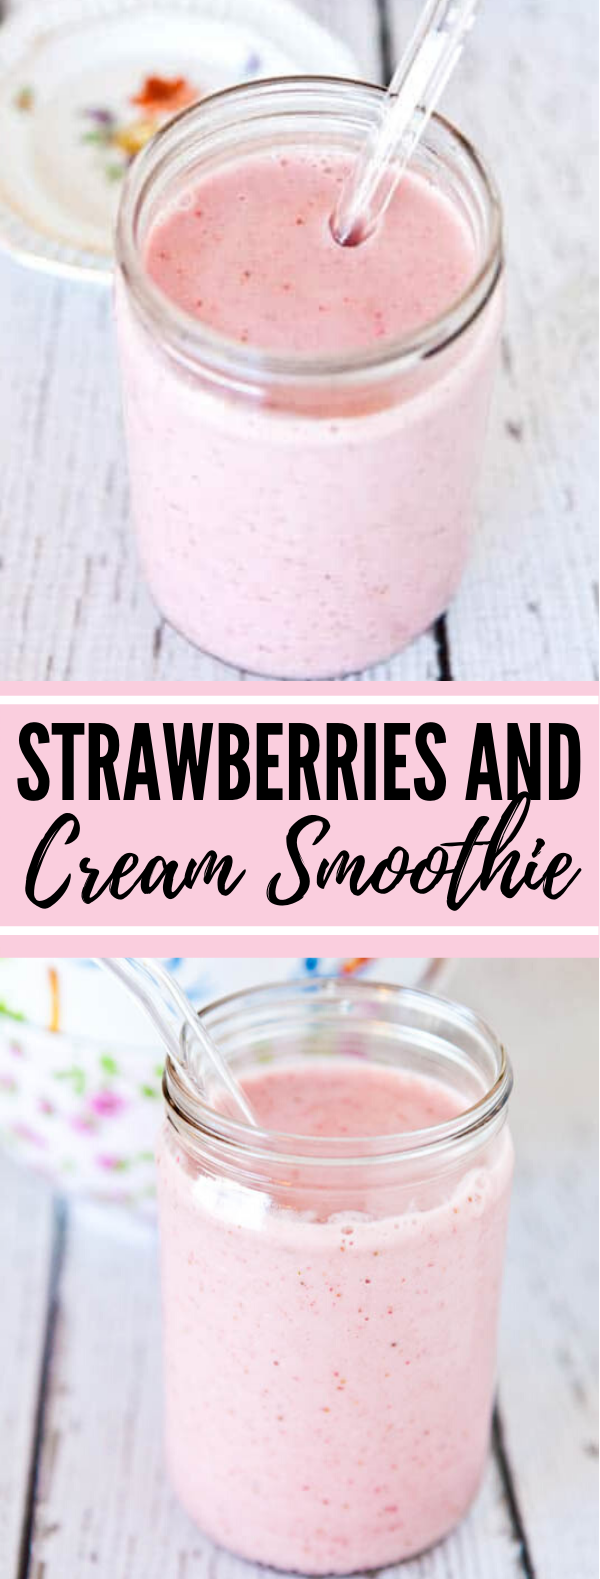 Strawberries and Cream Smoothie #drinks #springtime